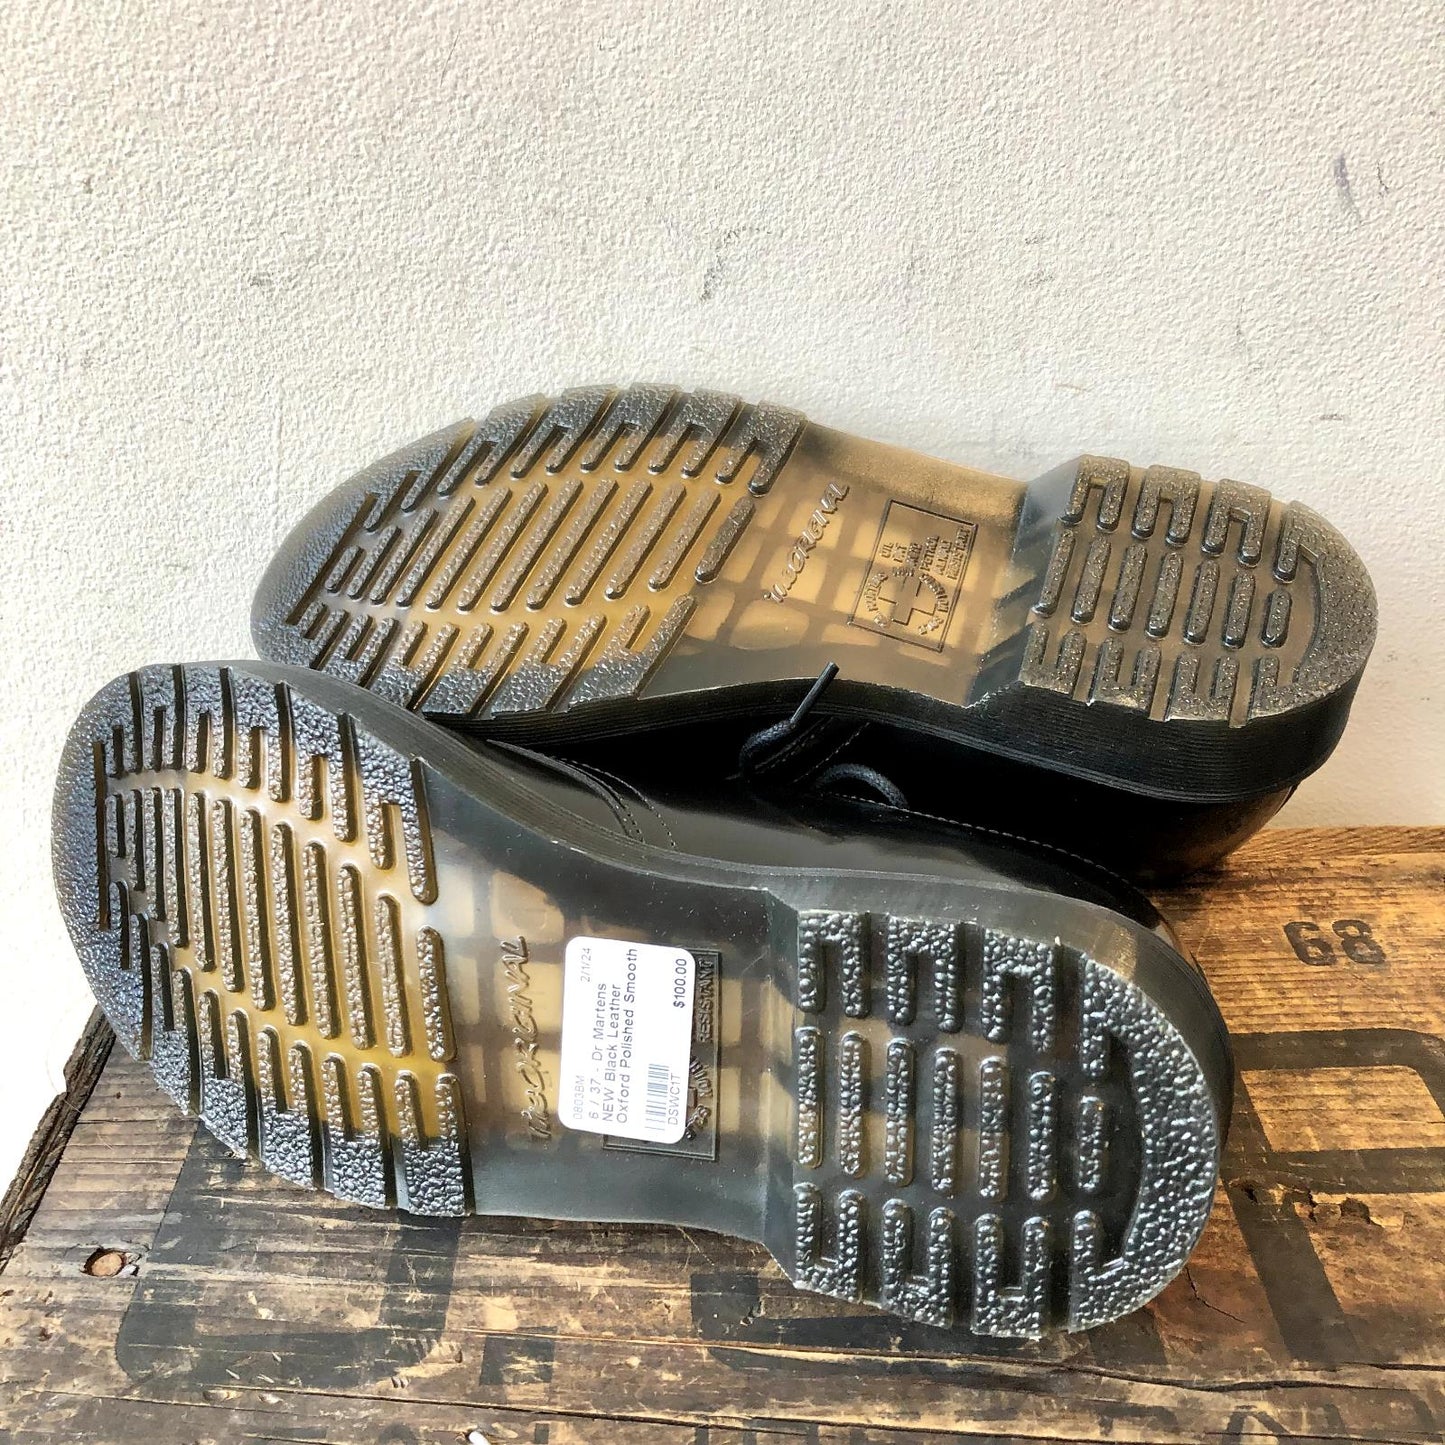 6 / 37 - Dr Martens NEW Black Leather Oxford Polished Smooth Shoes 0803BM